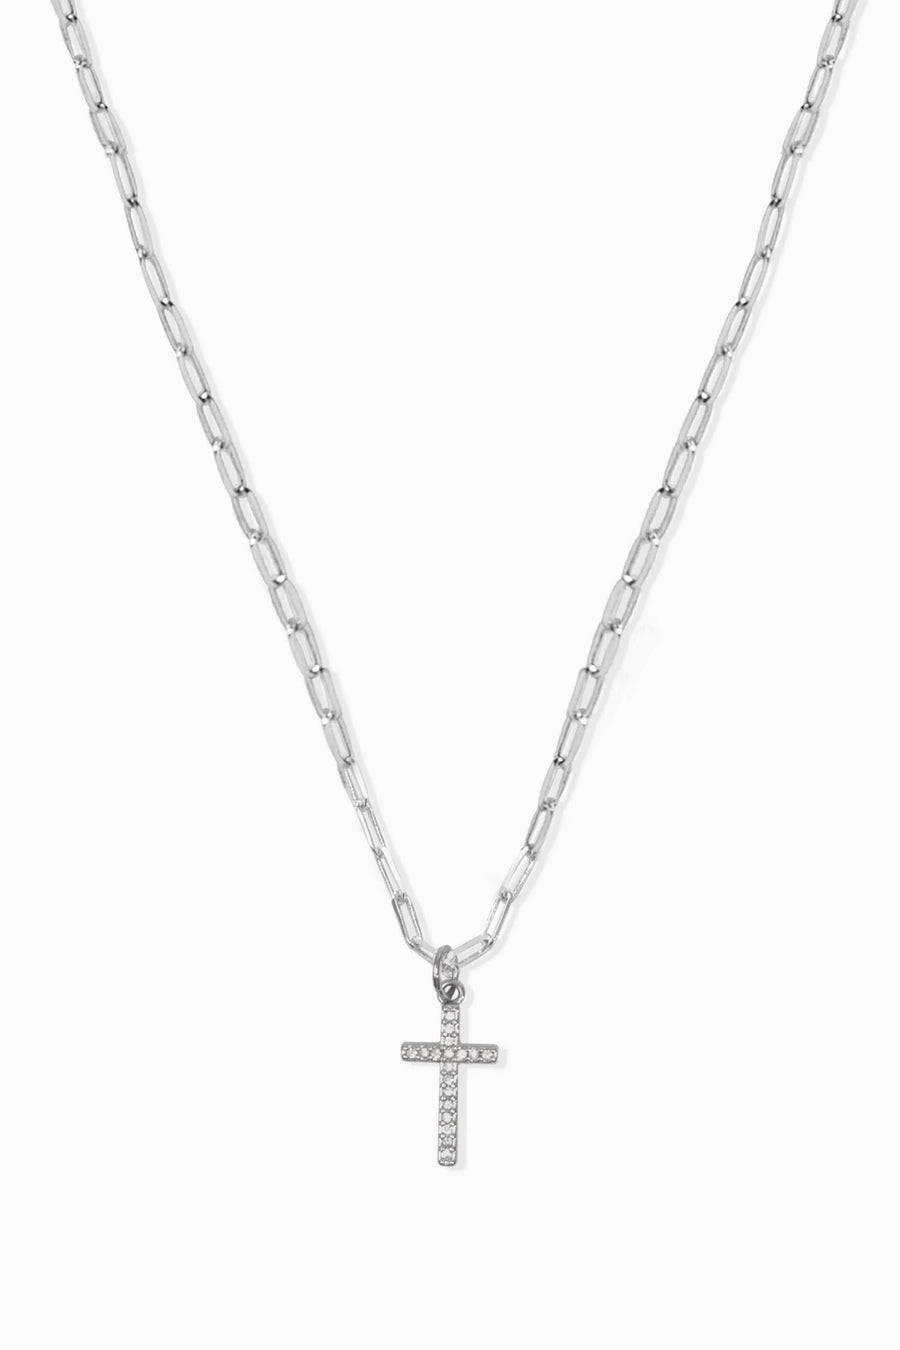 Delicate Pave Cross Necklace - Stella & Dot